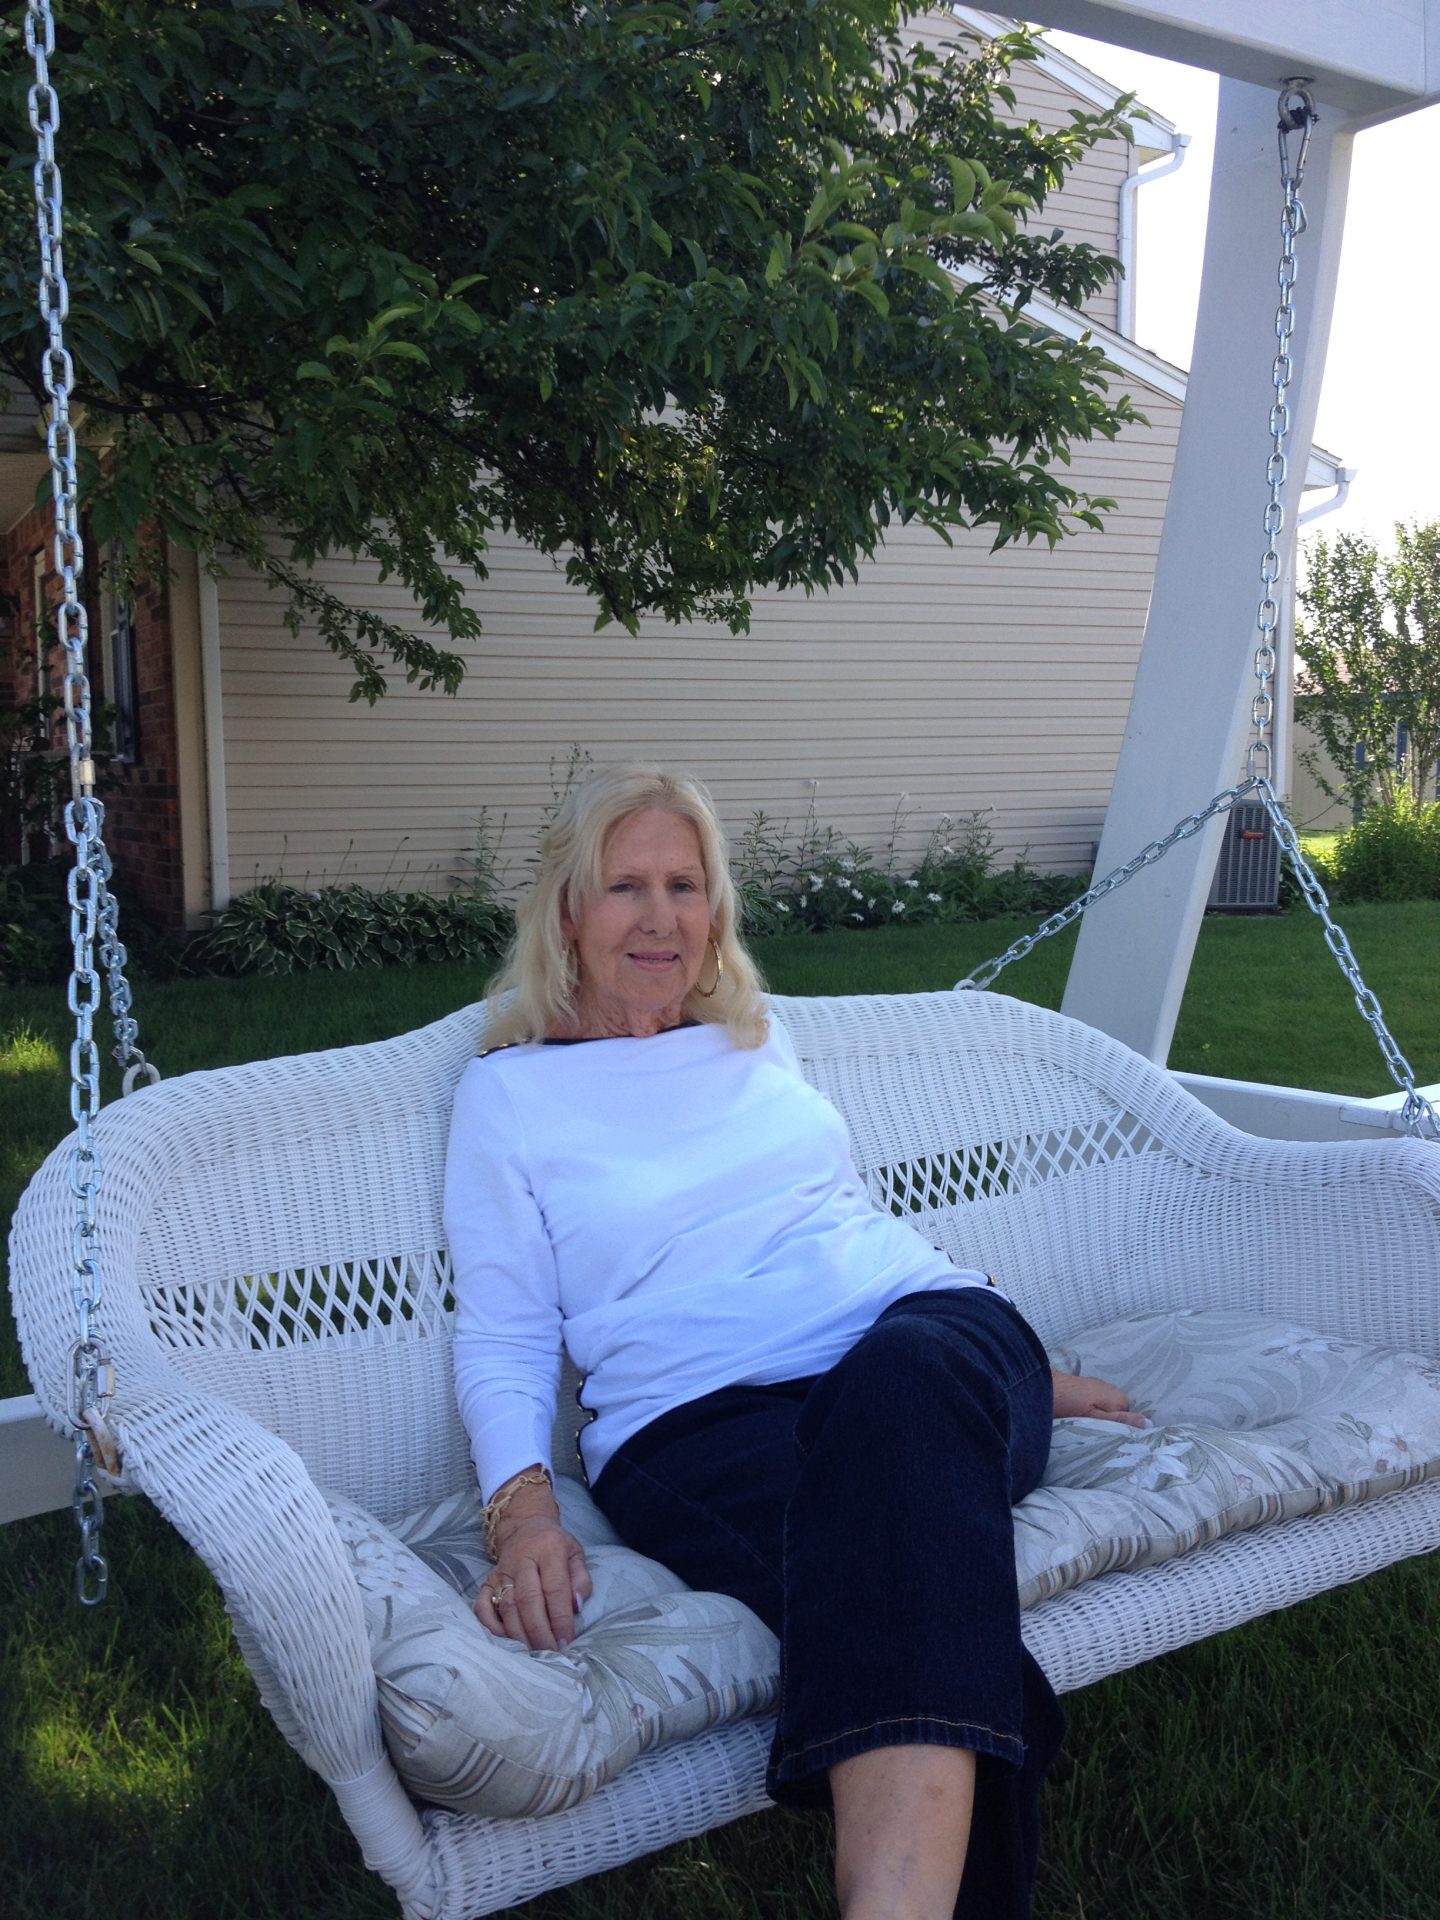 Mom enjoying the weather on her swing